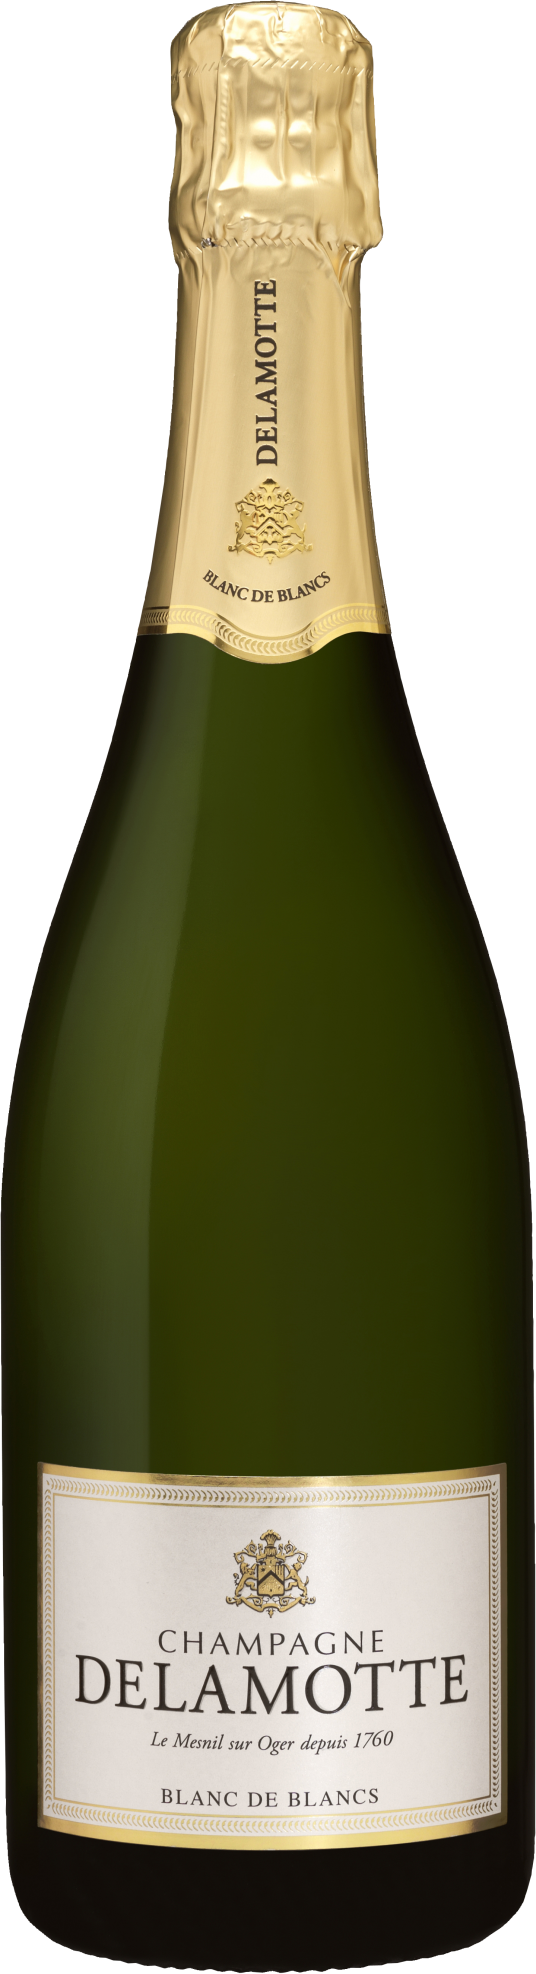 Delamotte Champagne Blanc de Blancs 2018